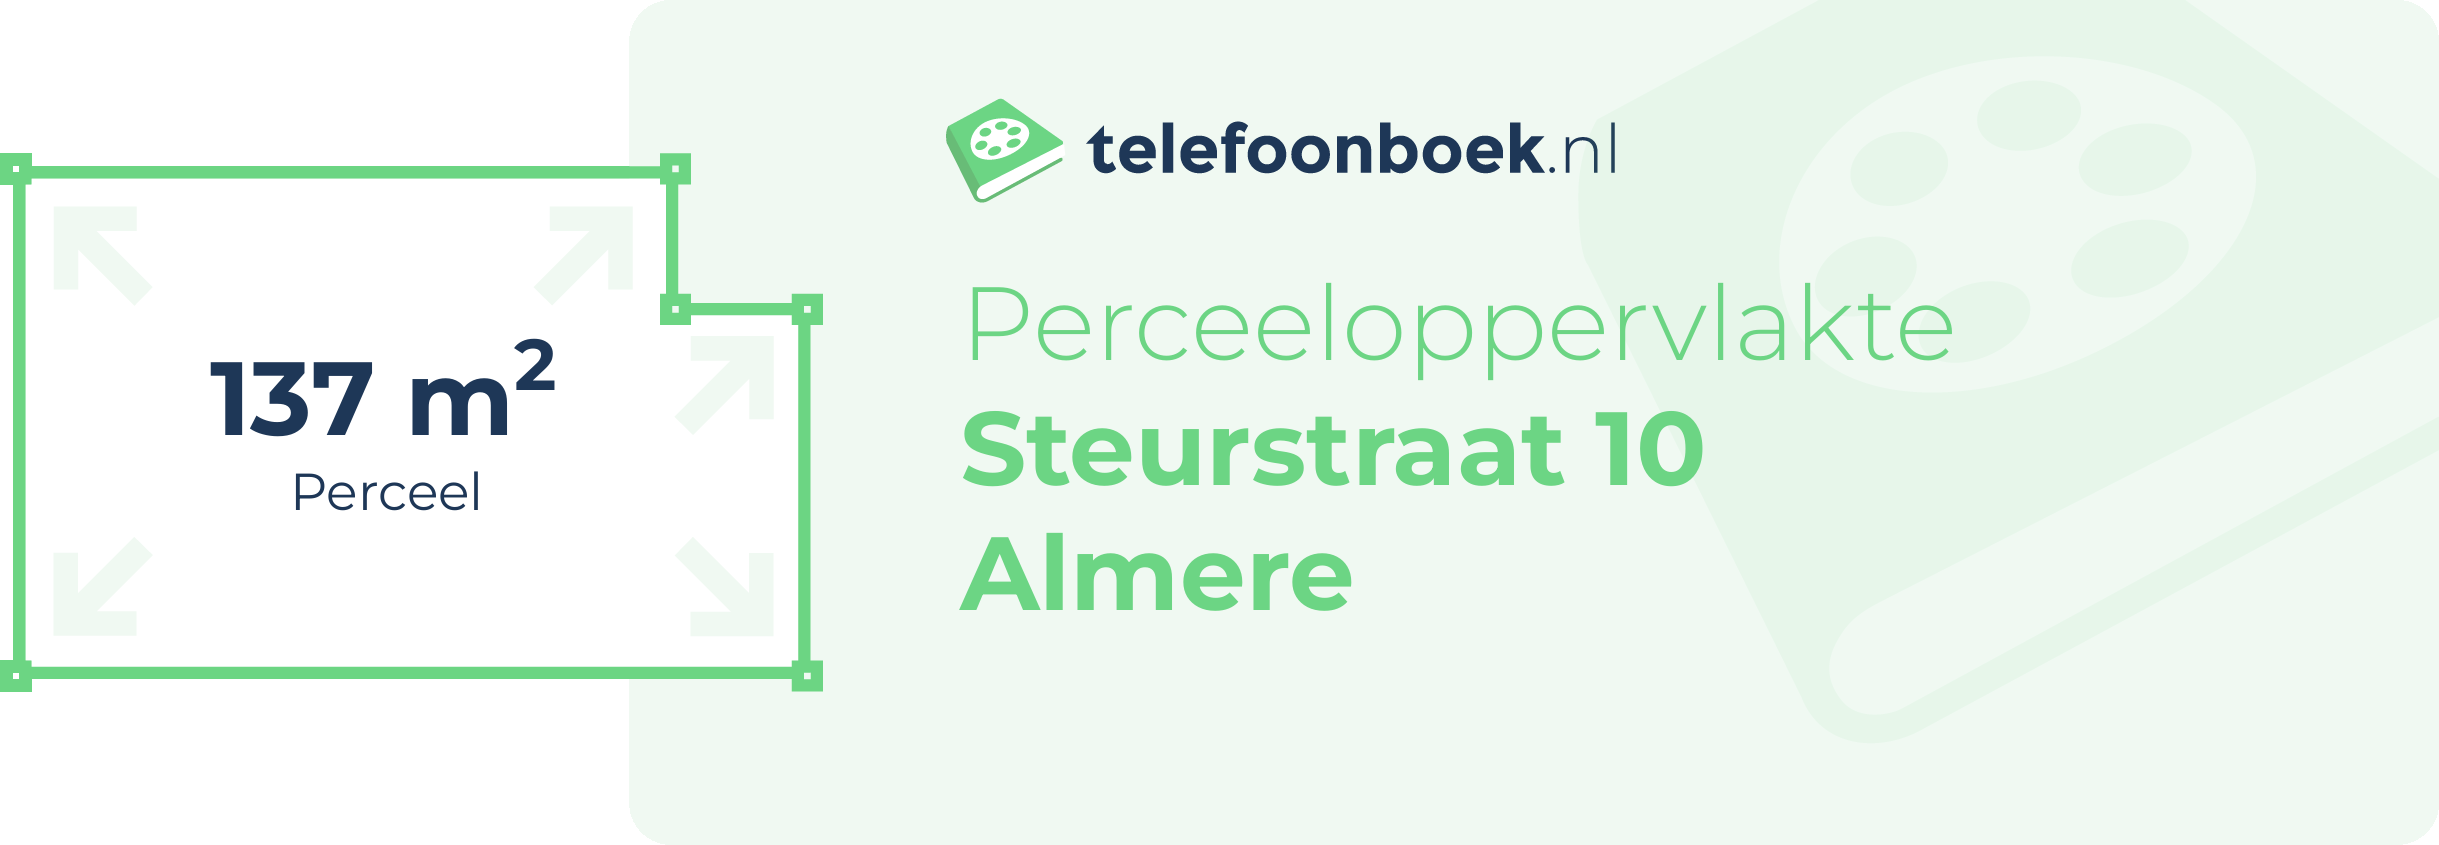 Perceeloppervlakte Steurstraat 10 Almere